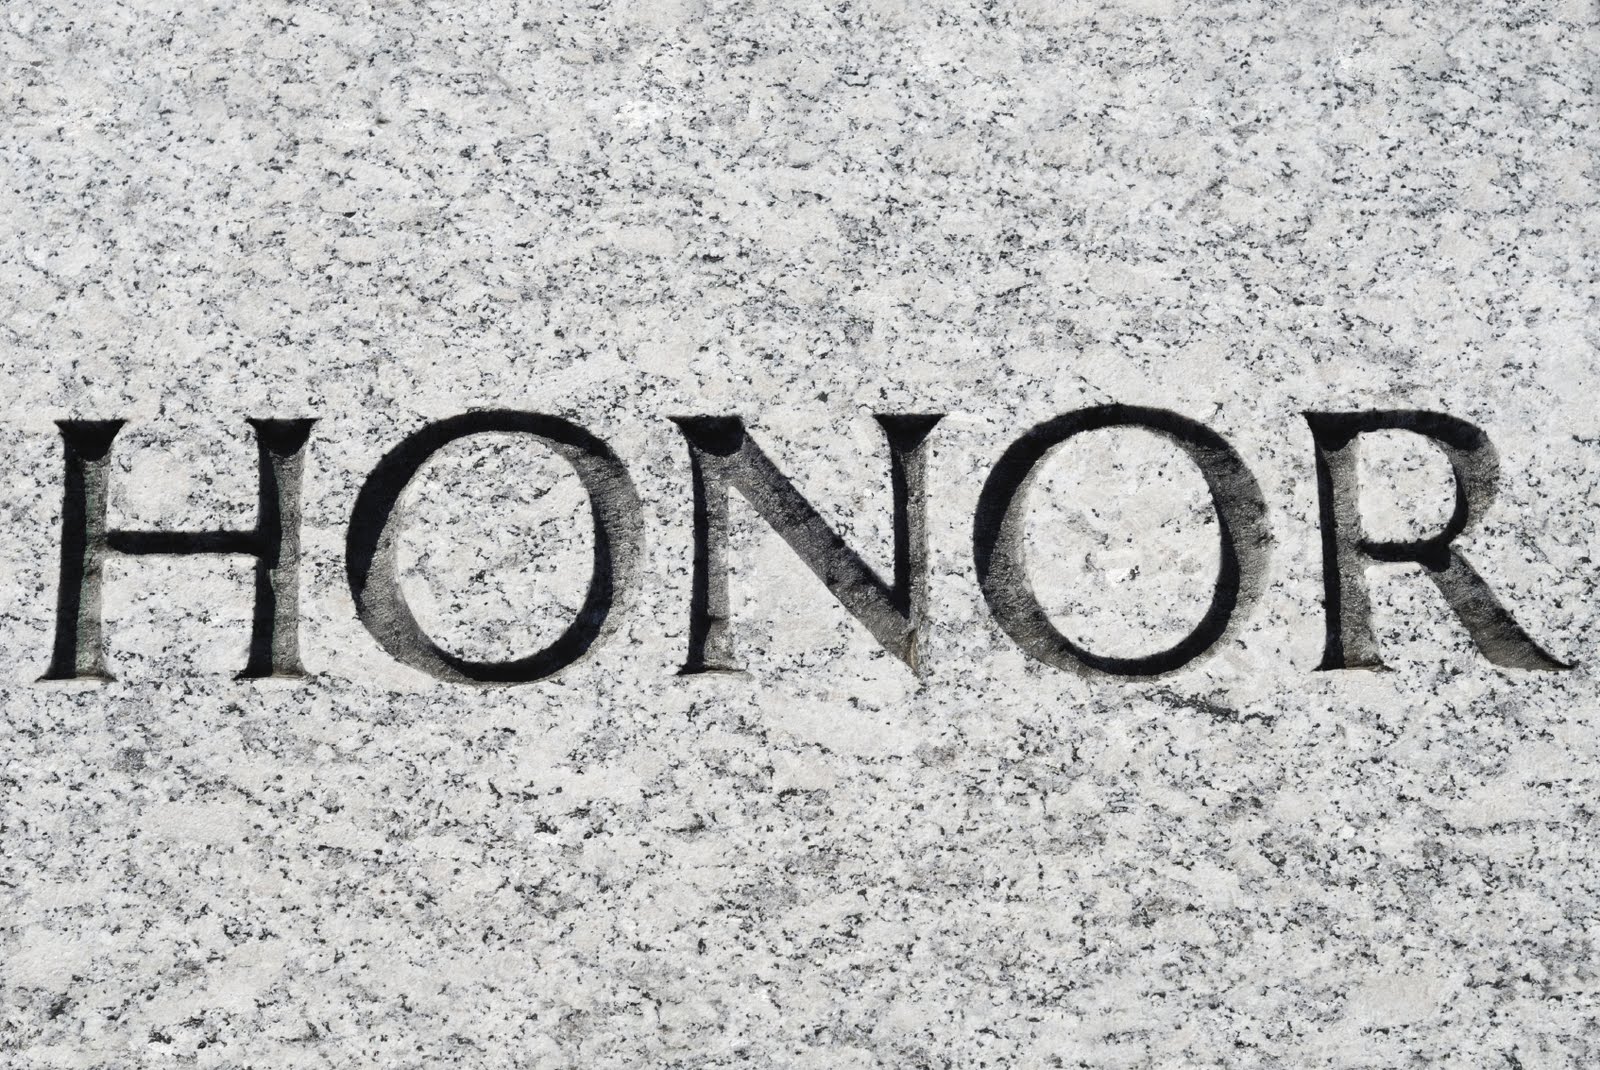 honor